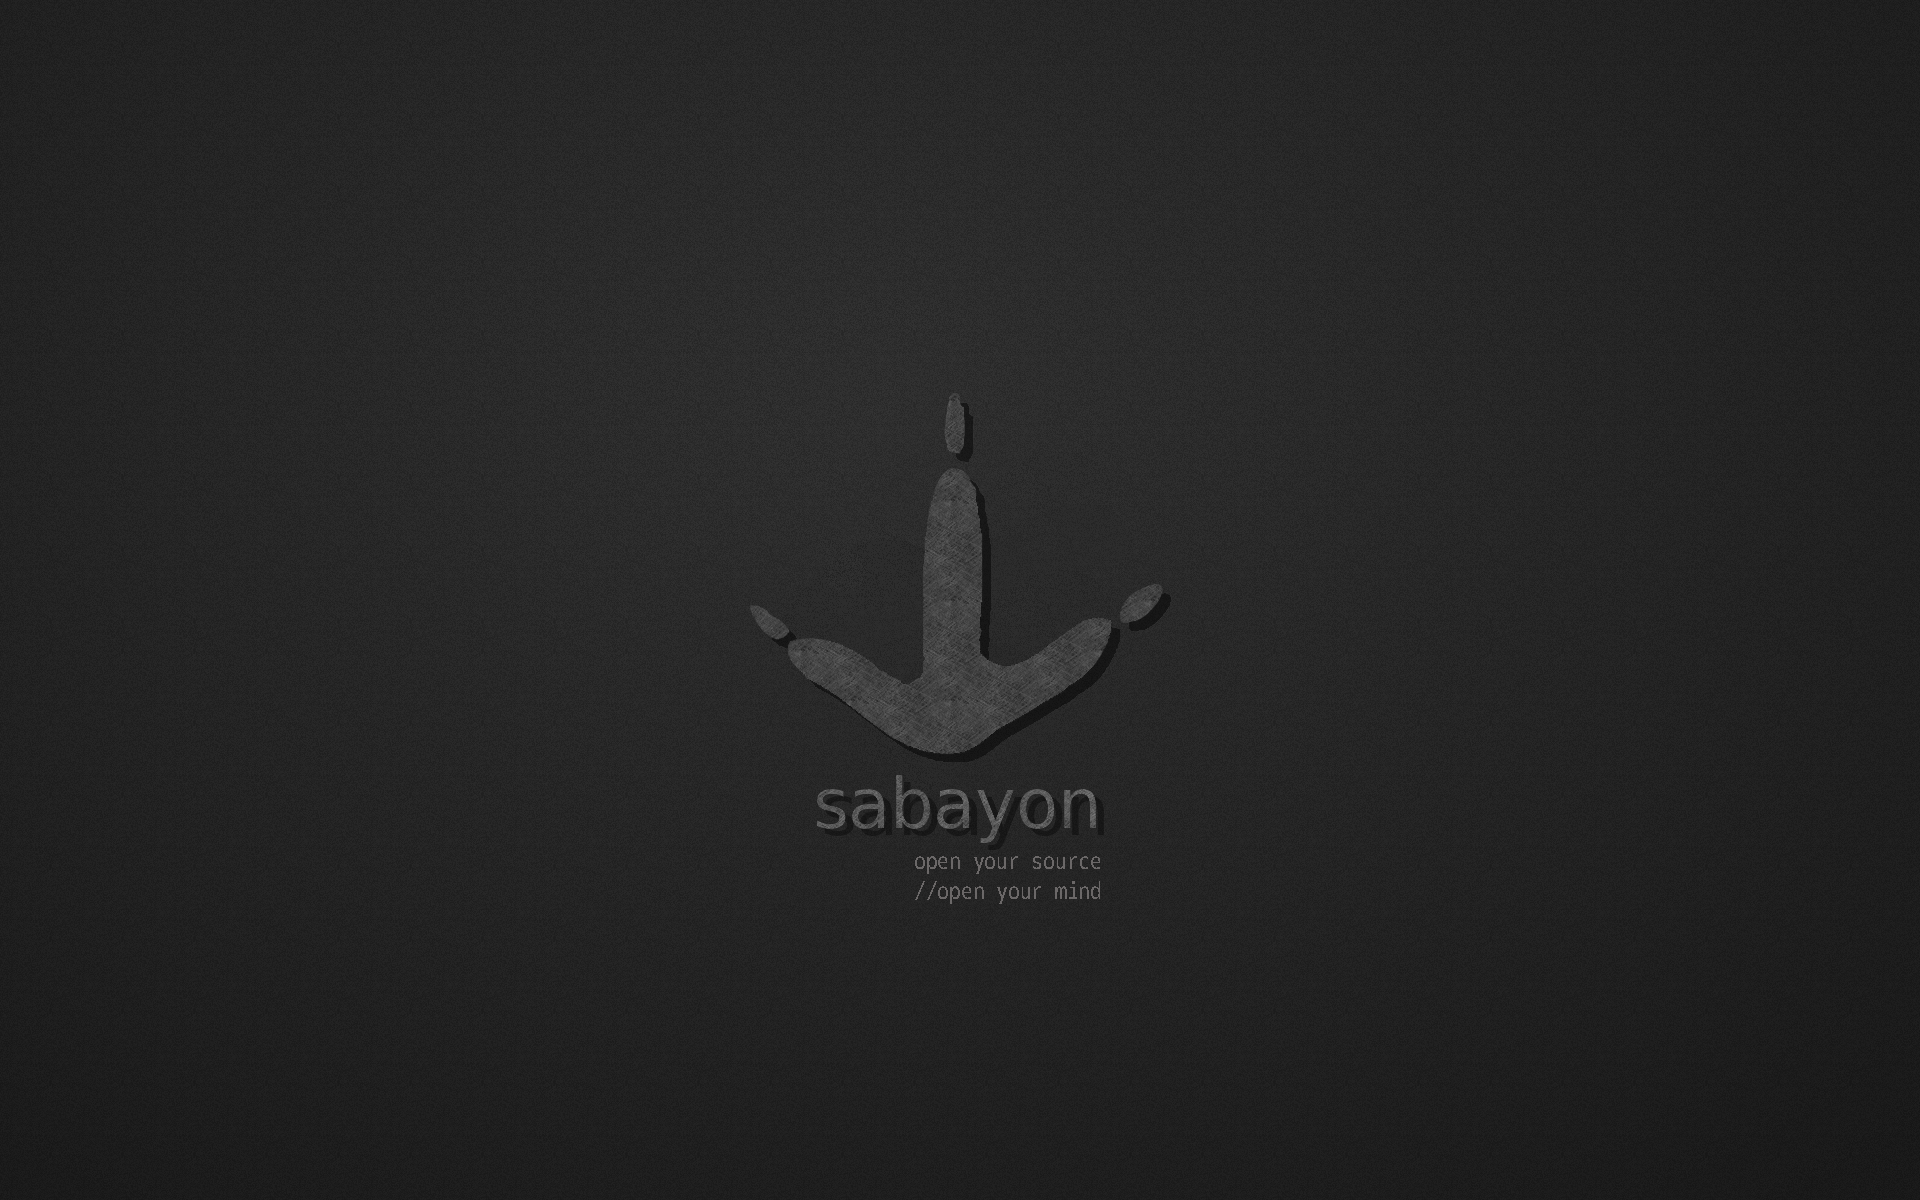 Sabayon Wallpaper By Typograflaw